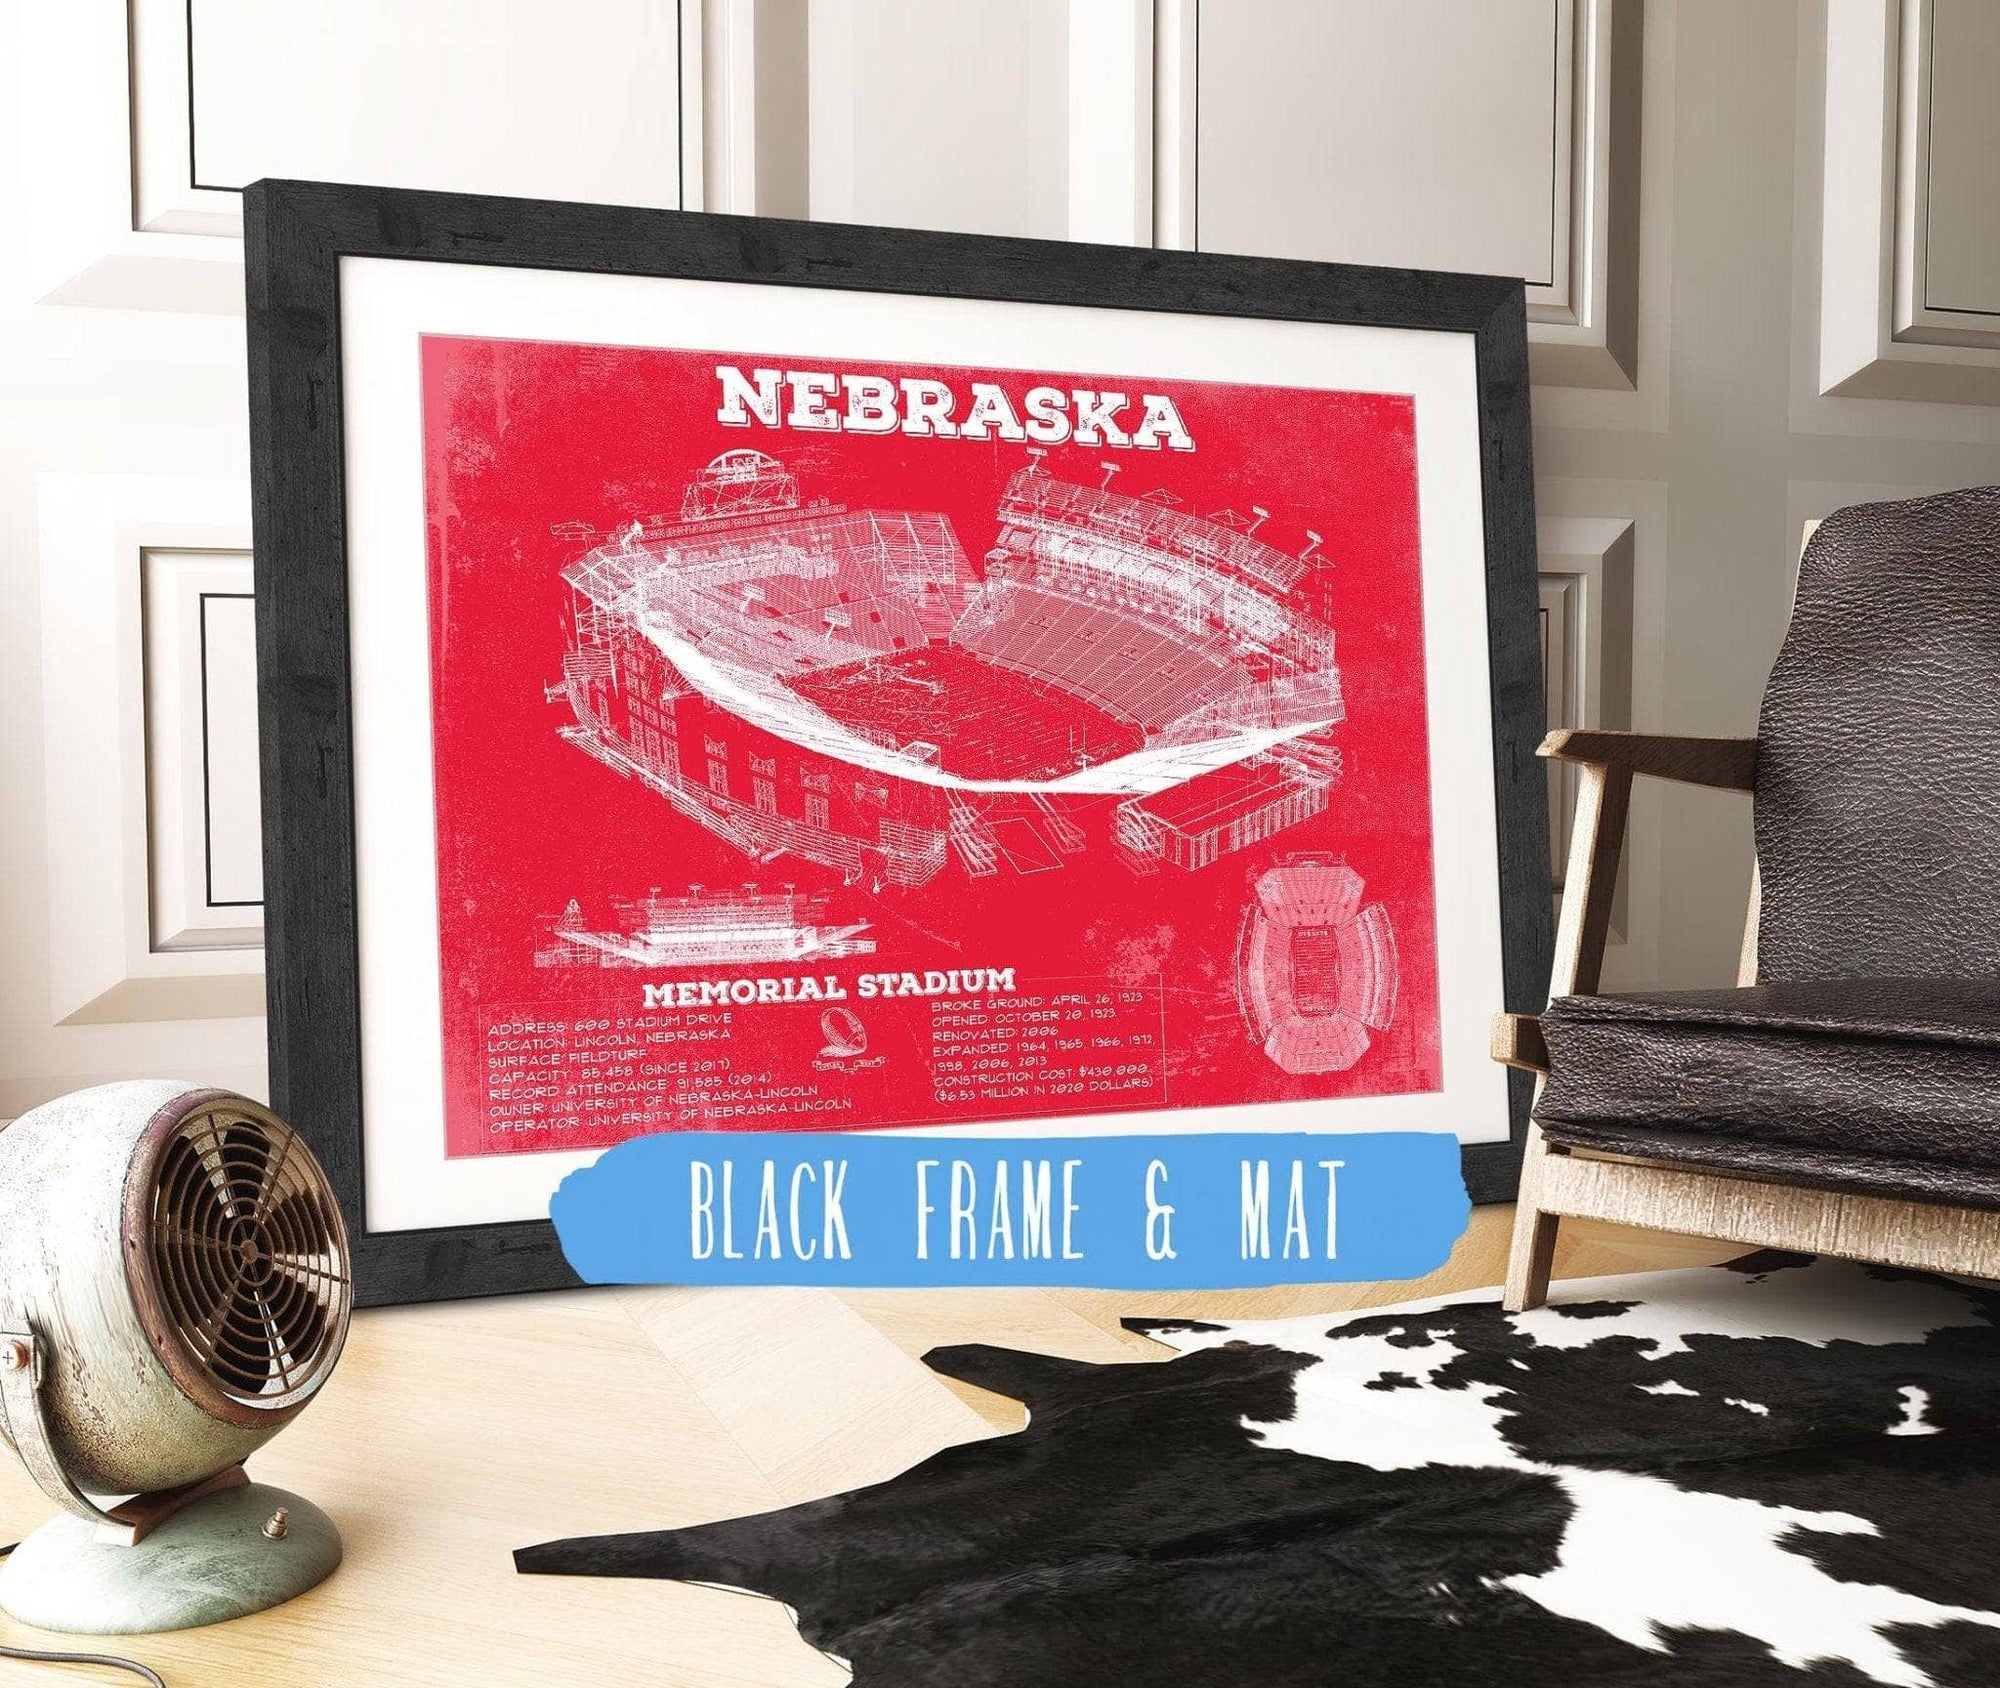 Cutler West College Football Collection 14" x 11" / Black Frame & Mat Nebraska Cornhuskers - Vintage Memorial Stadium (Lincoln) Art Print 933350118